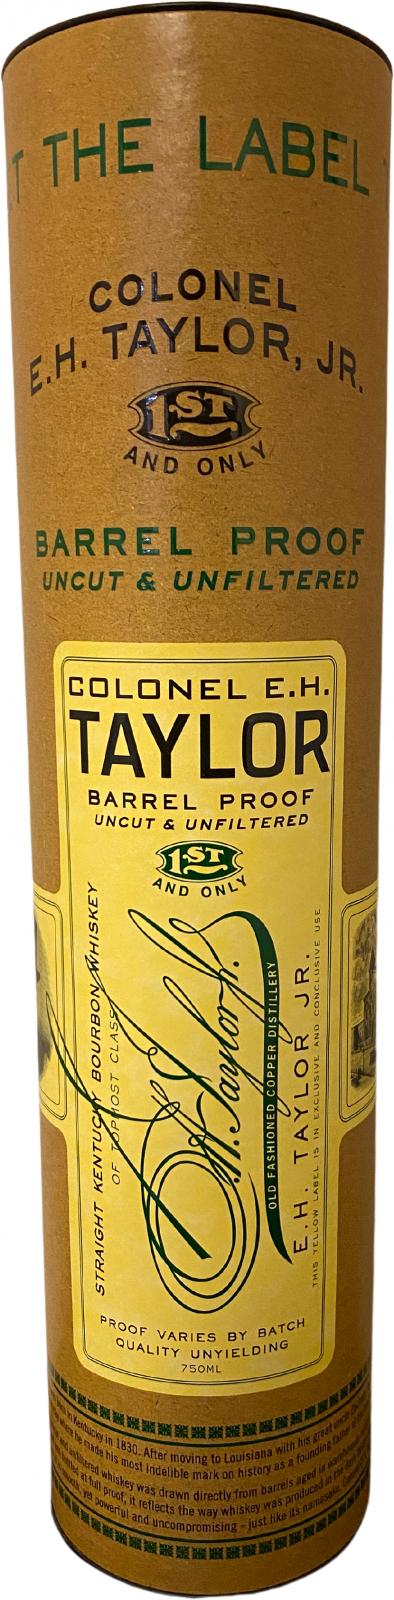 Colonel E.H. Taylor Barrel Proof